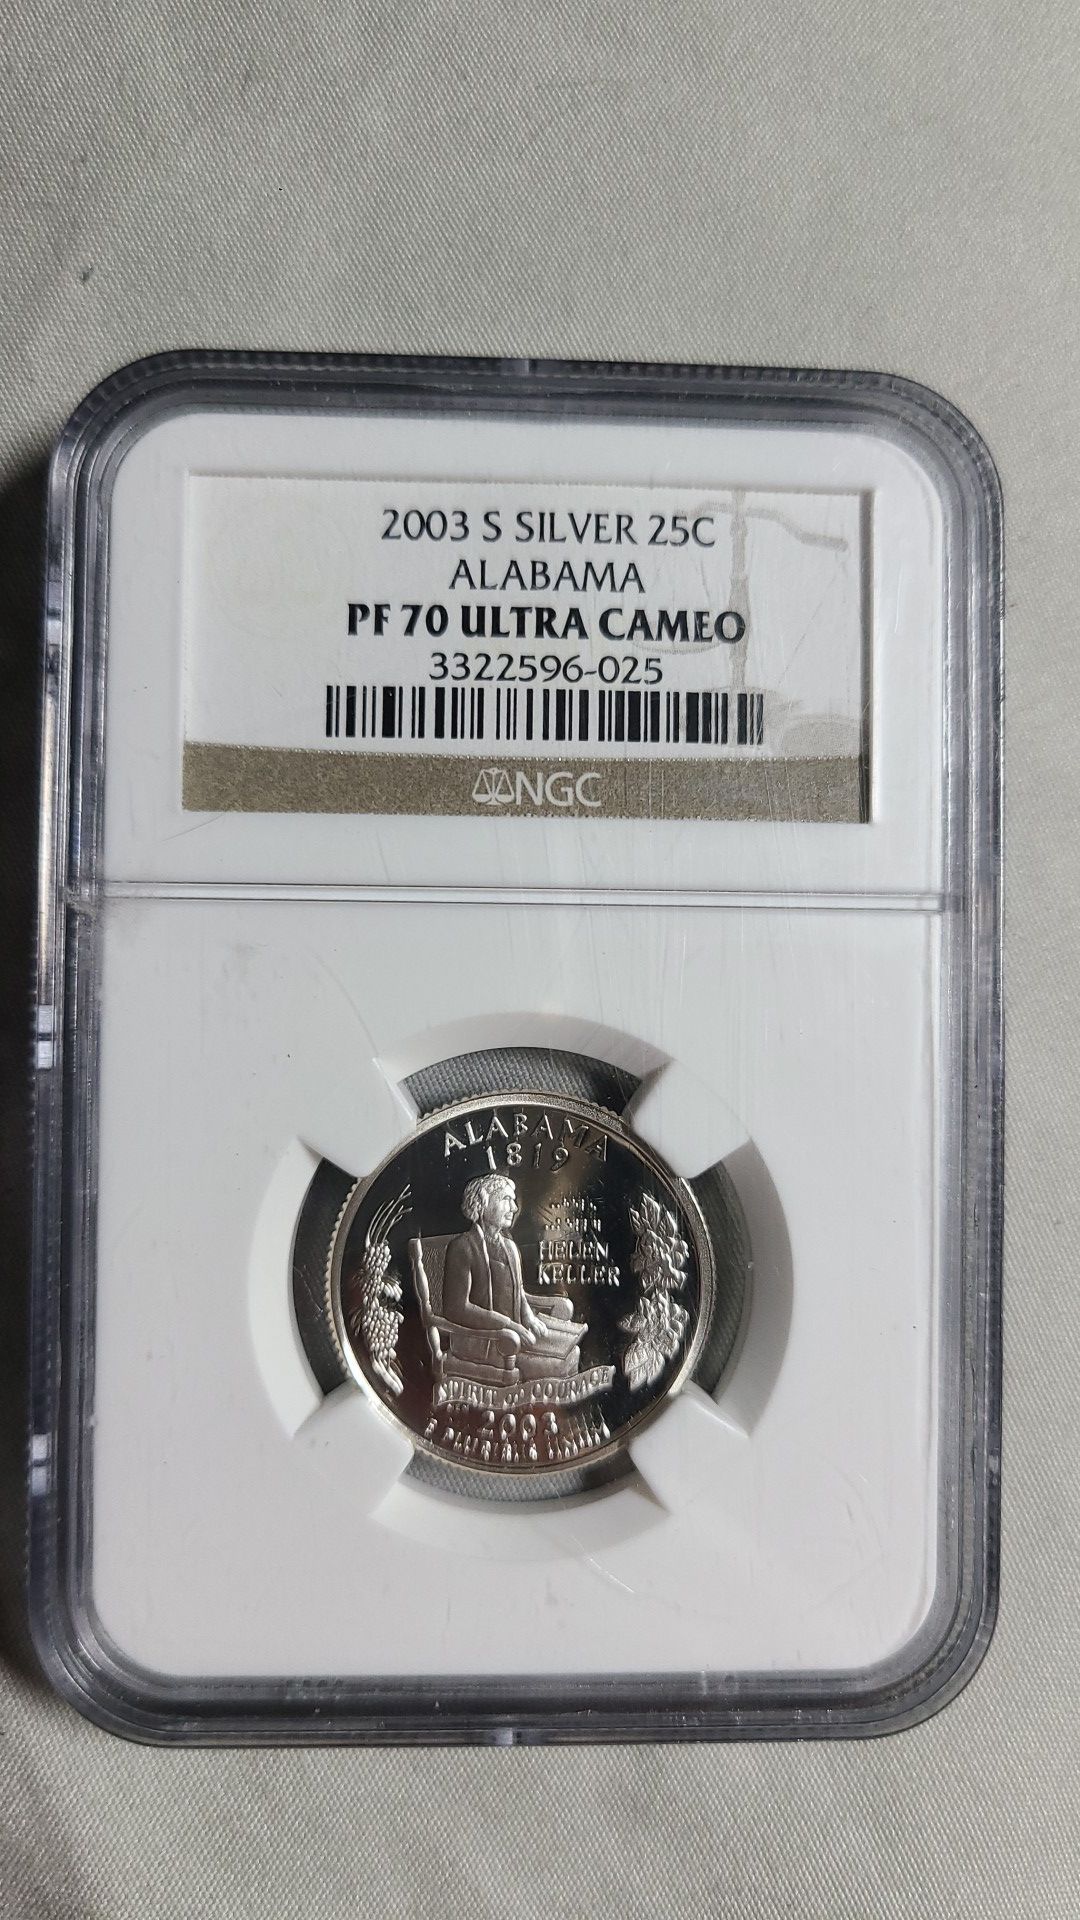 2003 s Silver quarter dollar ULTRA CAMEO PF 70